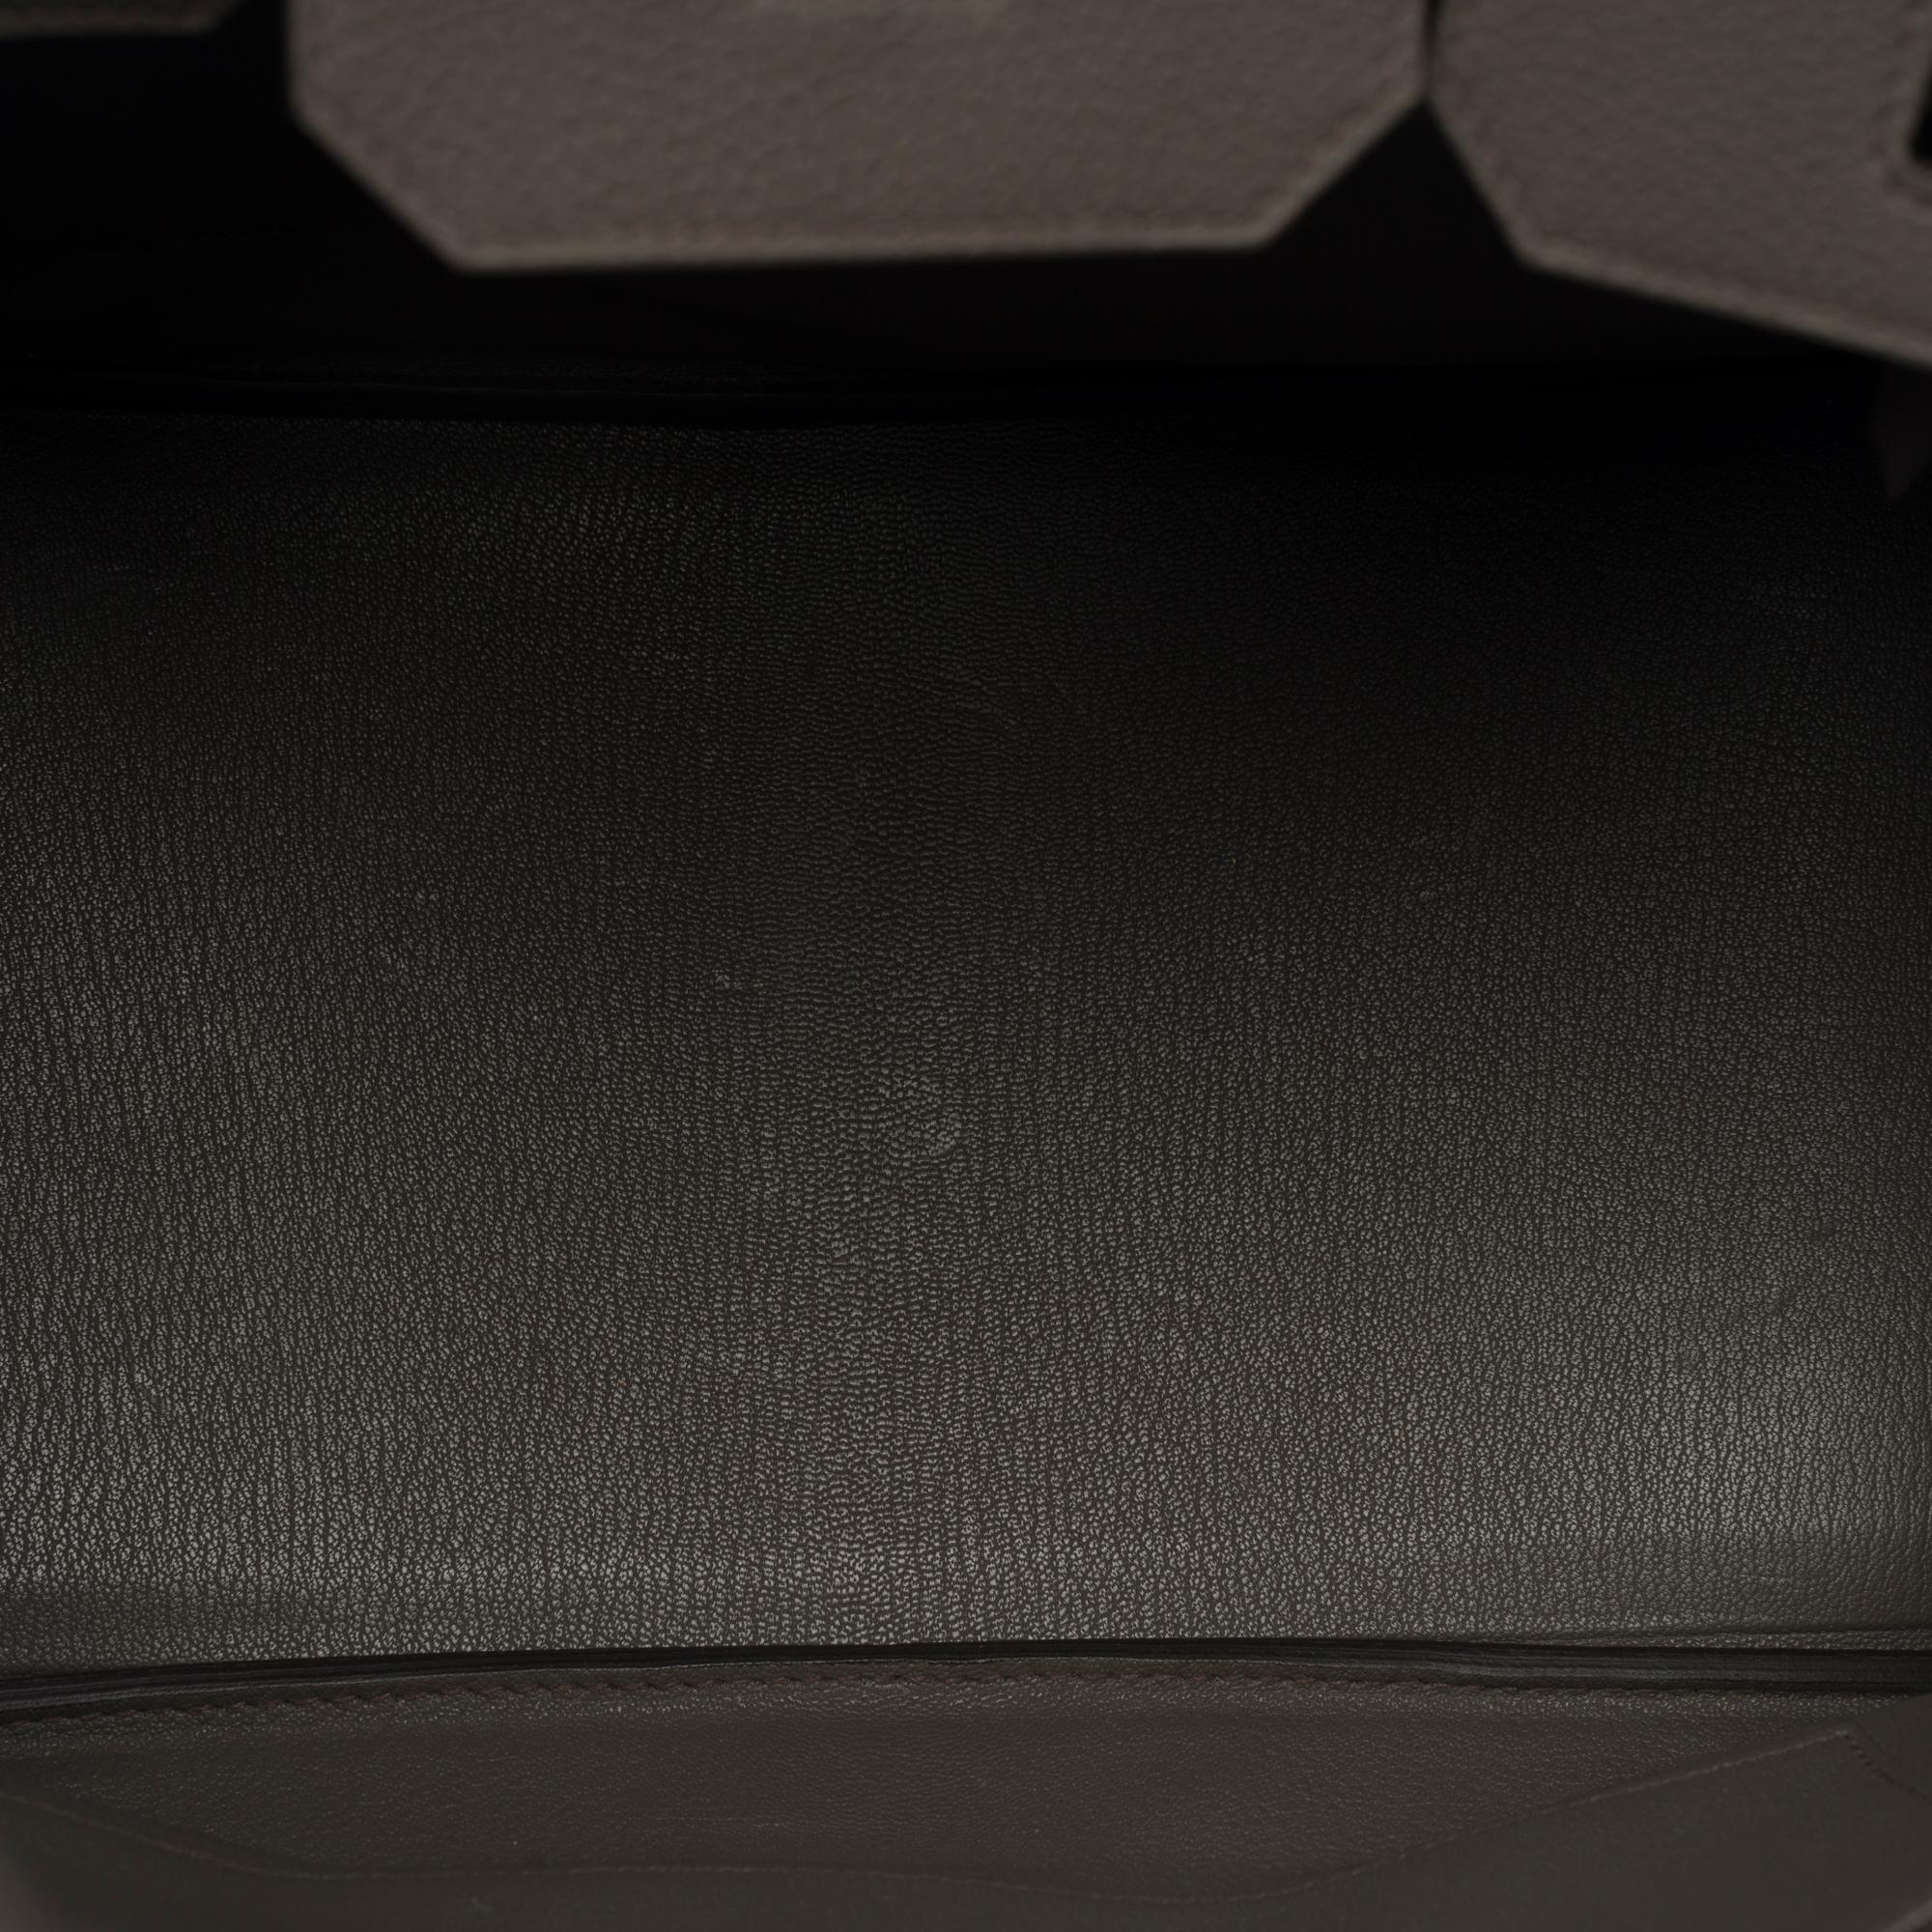 Almost New -Full set-Hermès Birkin 35 handbag in Etain Togo leather, SHW 2